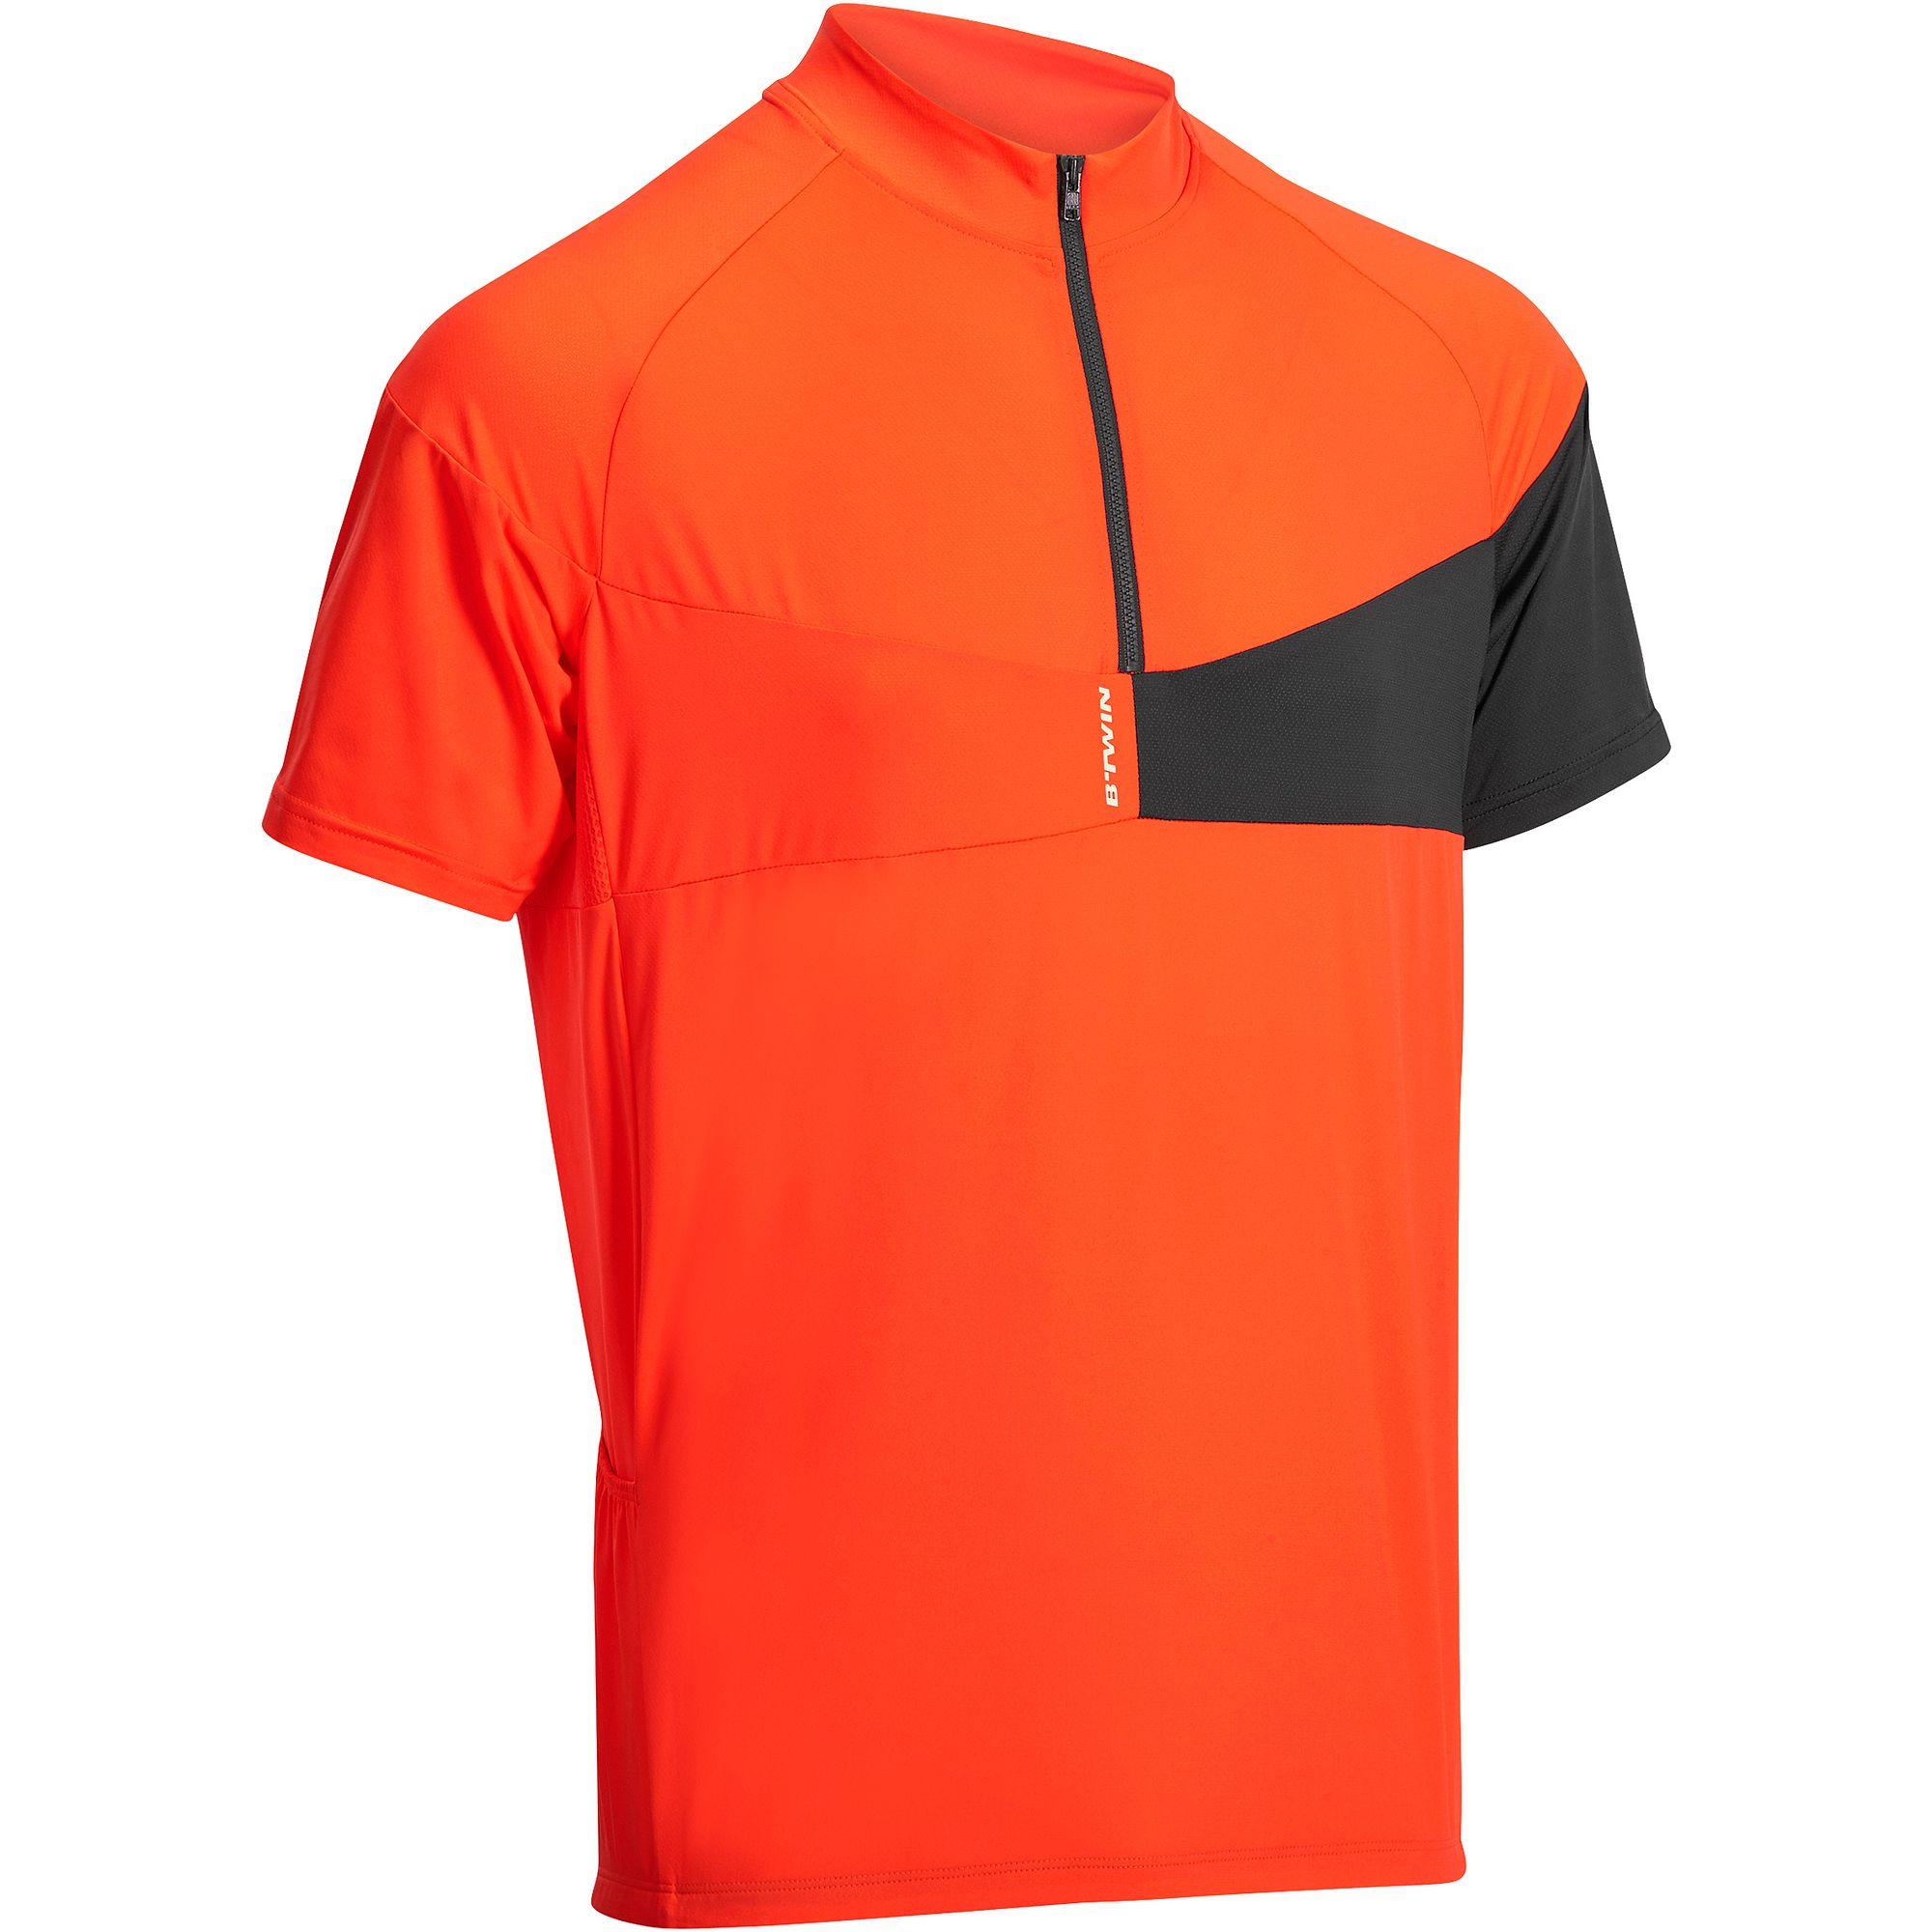 BTWIN 500 Short-Sleeved Cycling Jersey - Orange/Grey